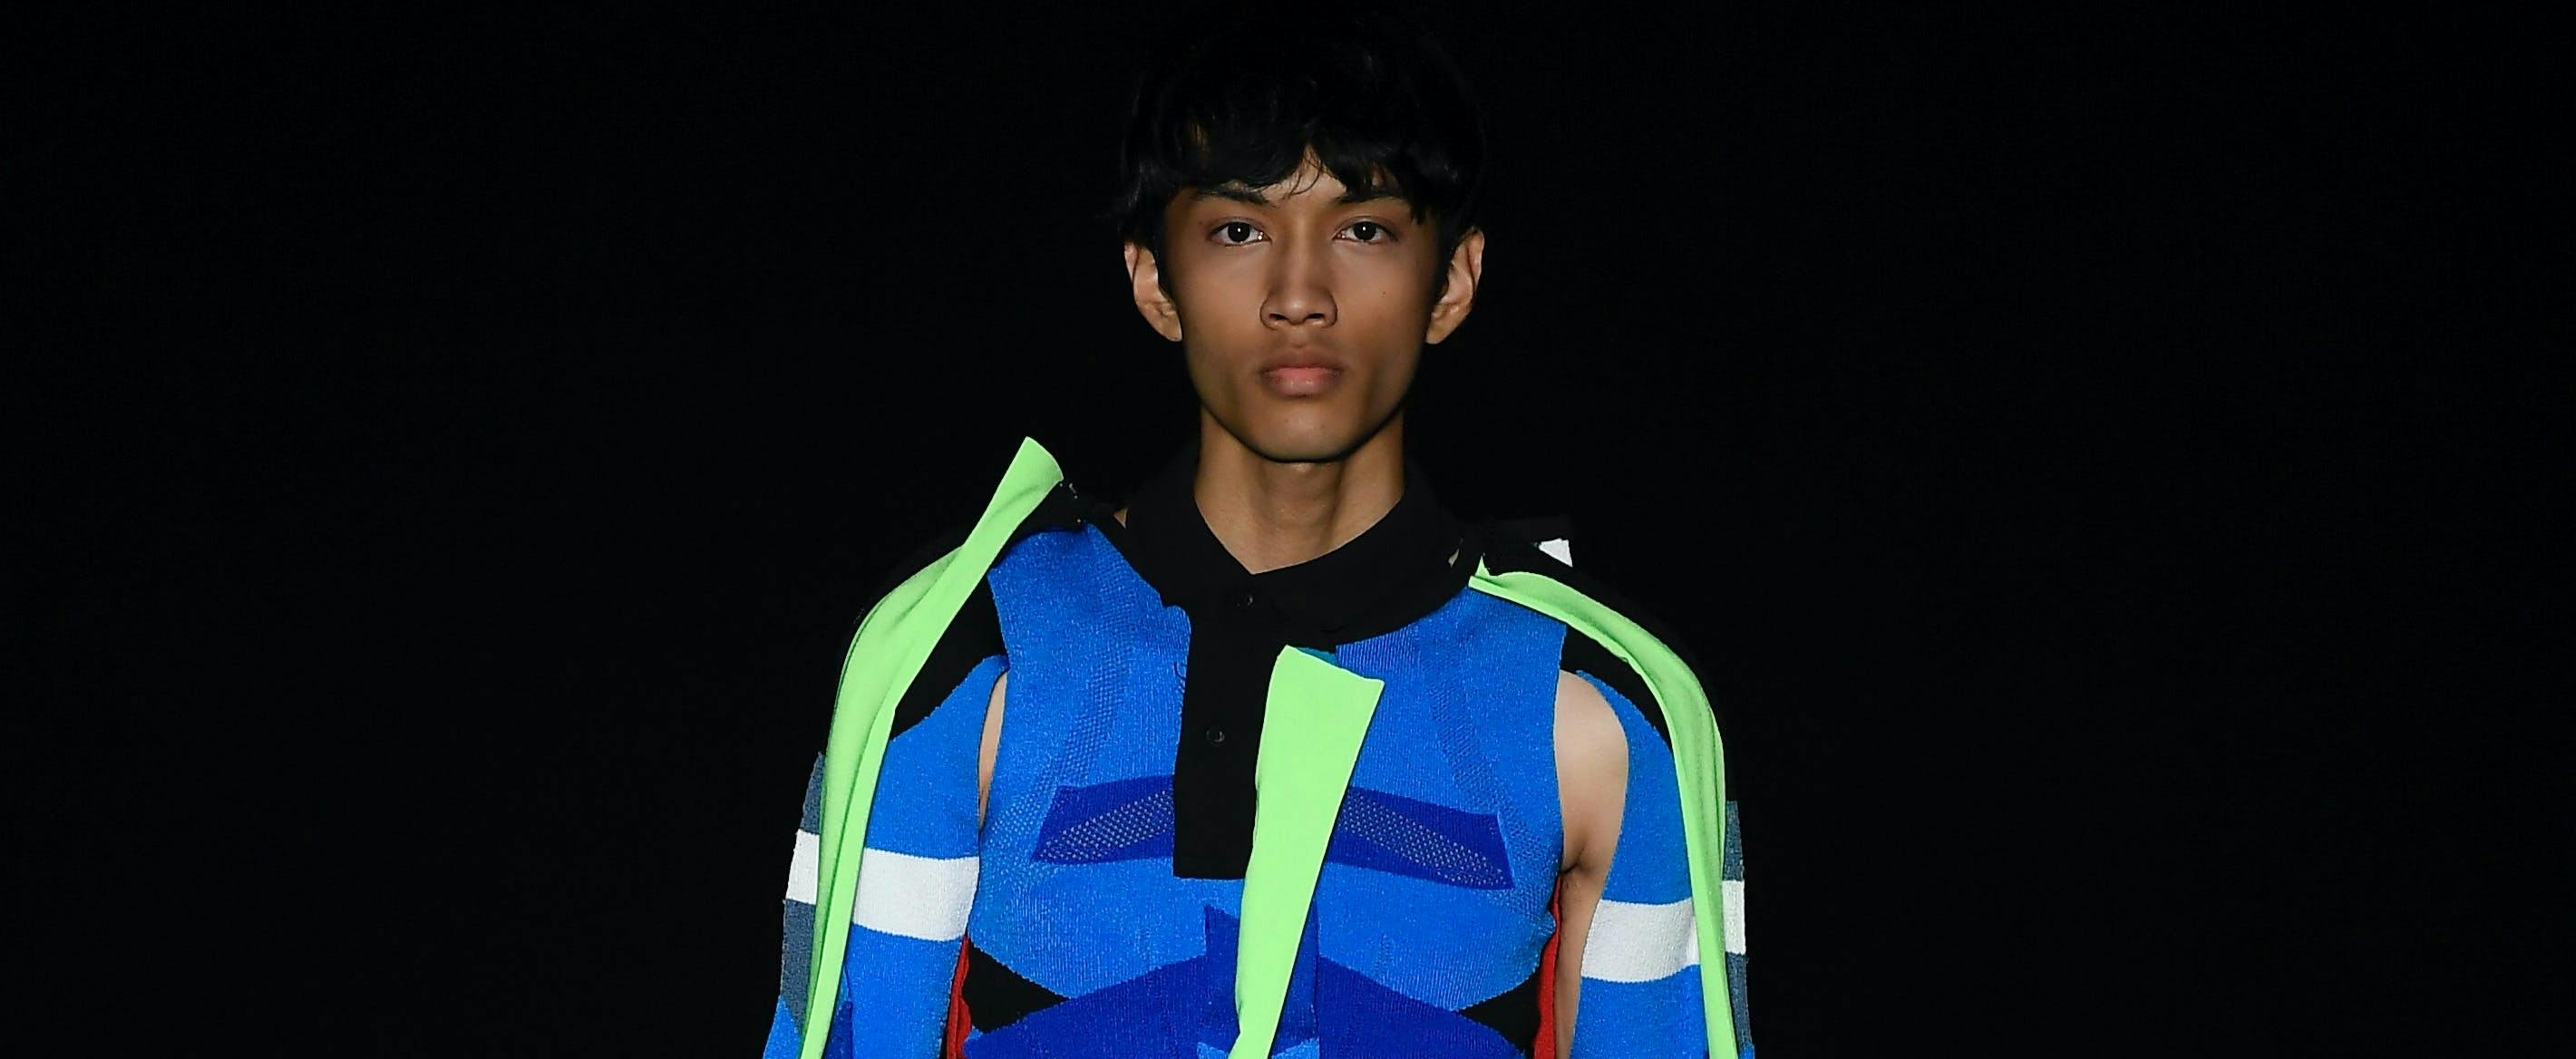 clothing apparel person human vest sleeve lifejacket